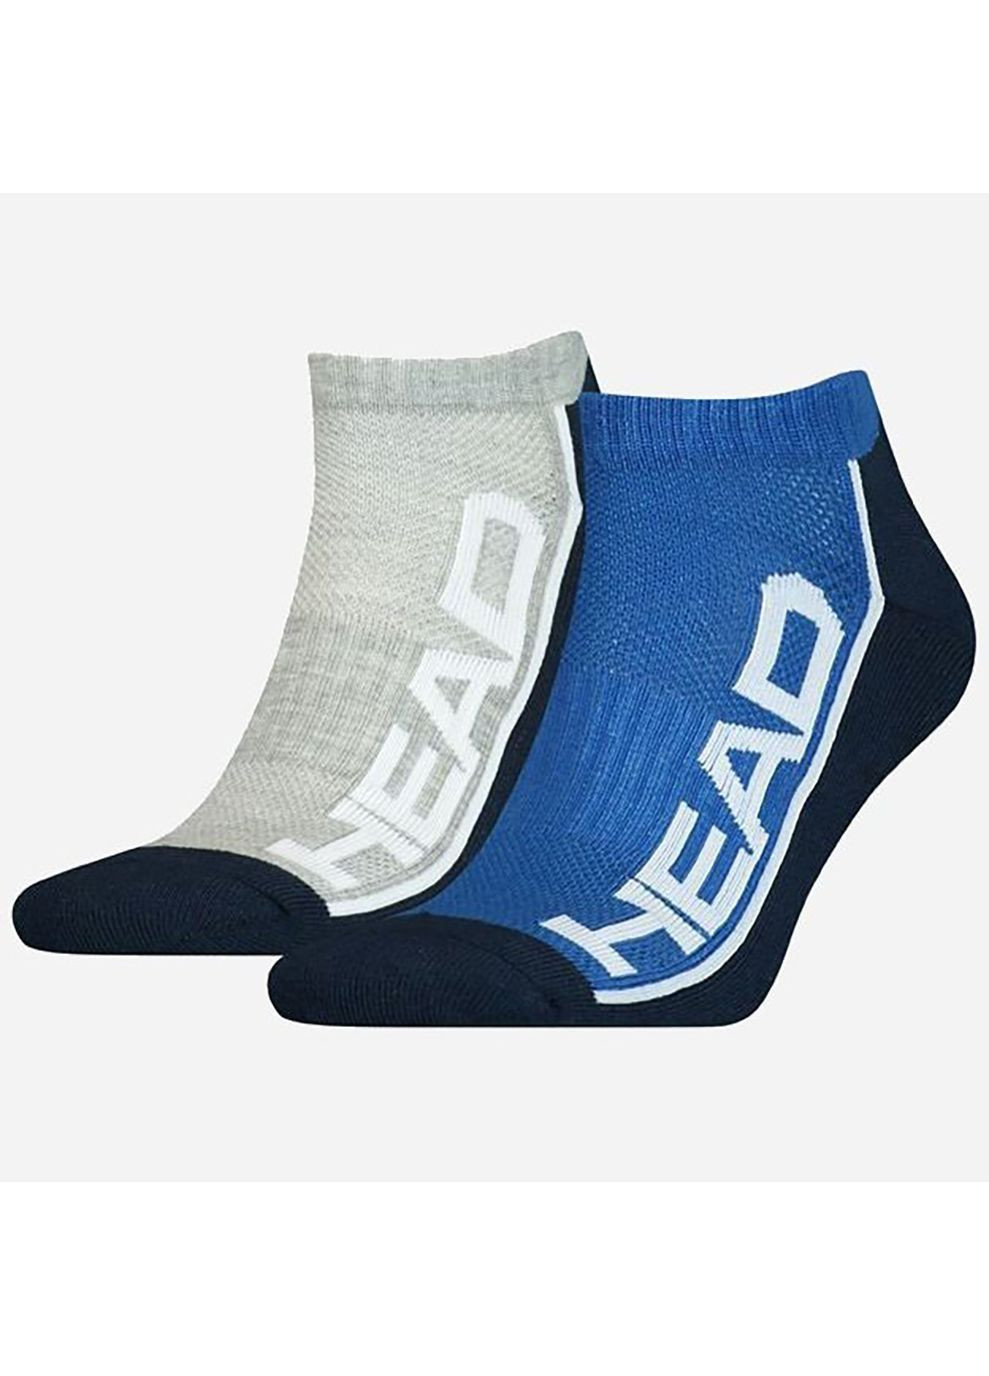 Носки Performance sneaker 2-pack blue/grey Серый Синий Head (282616319)